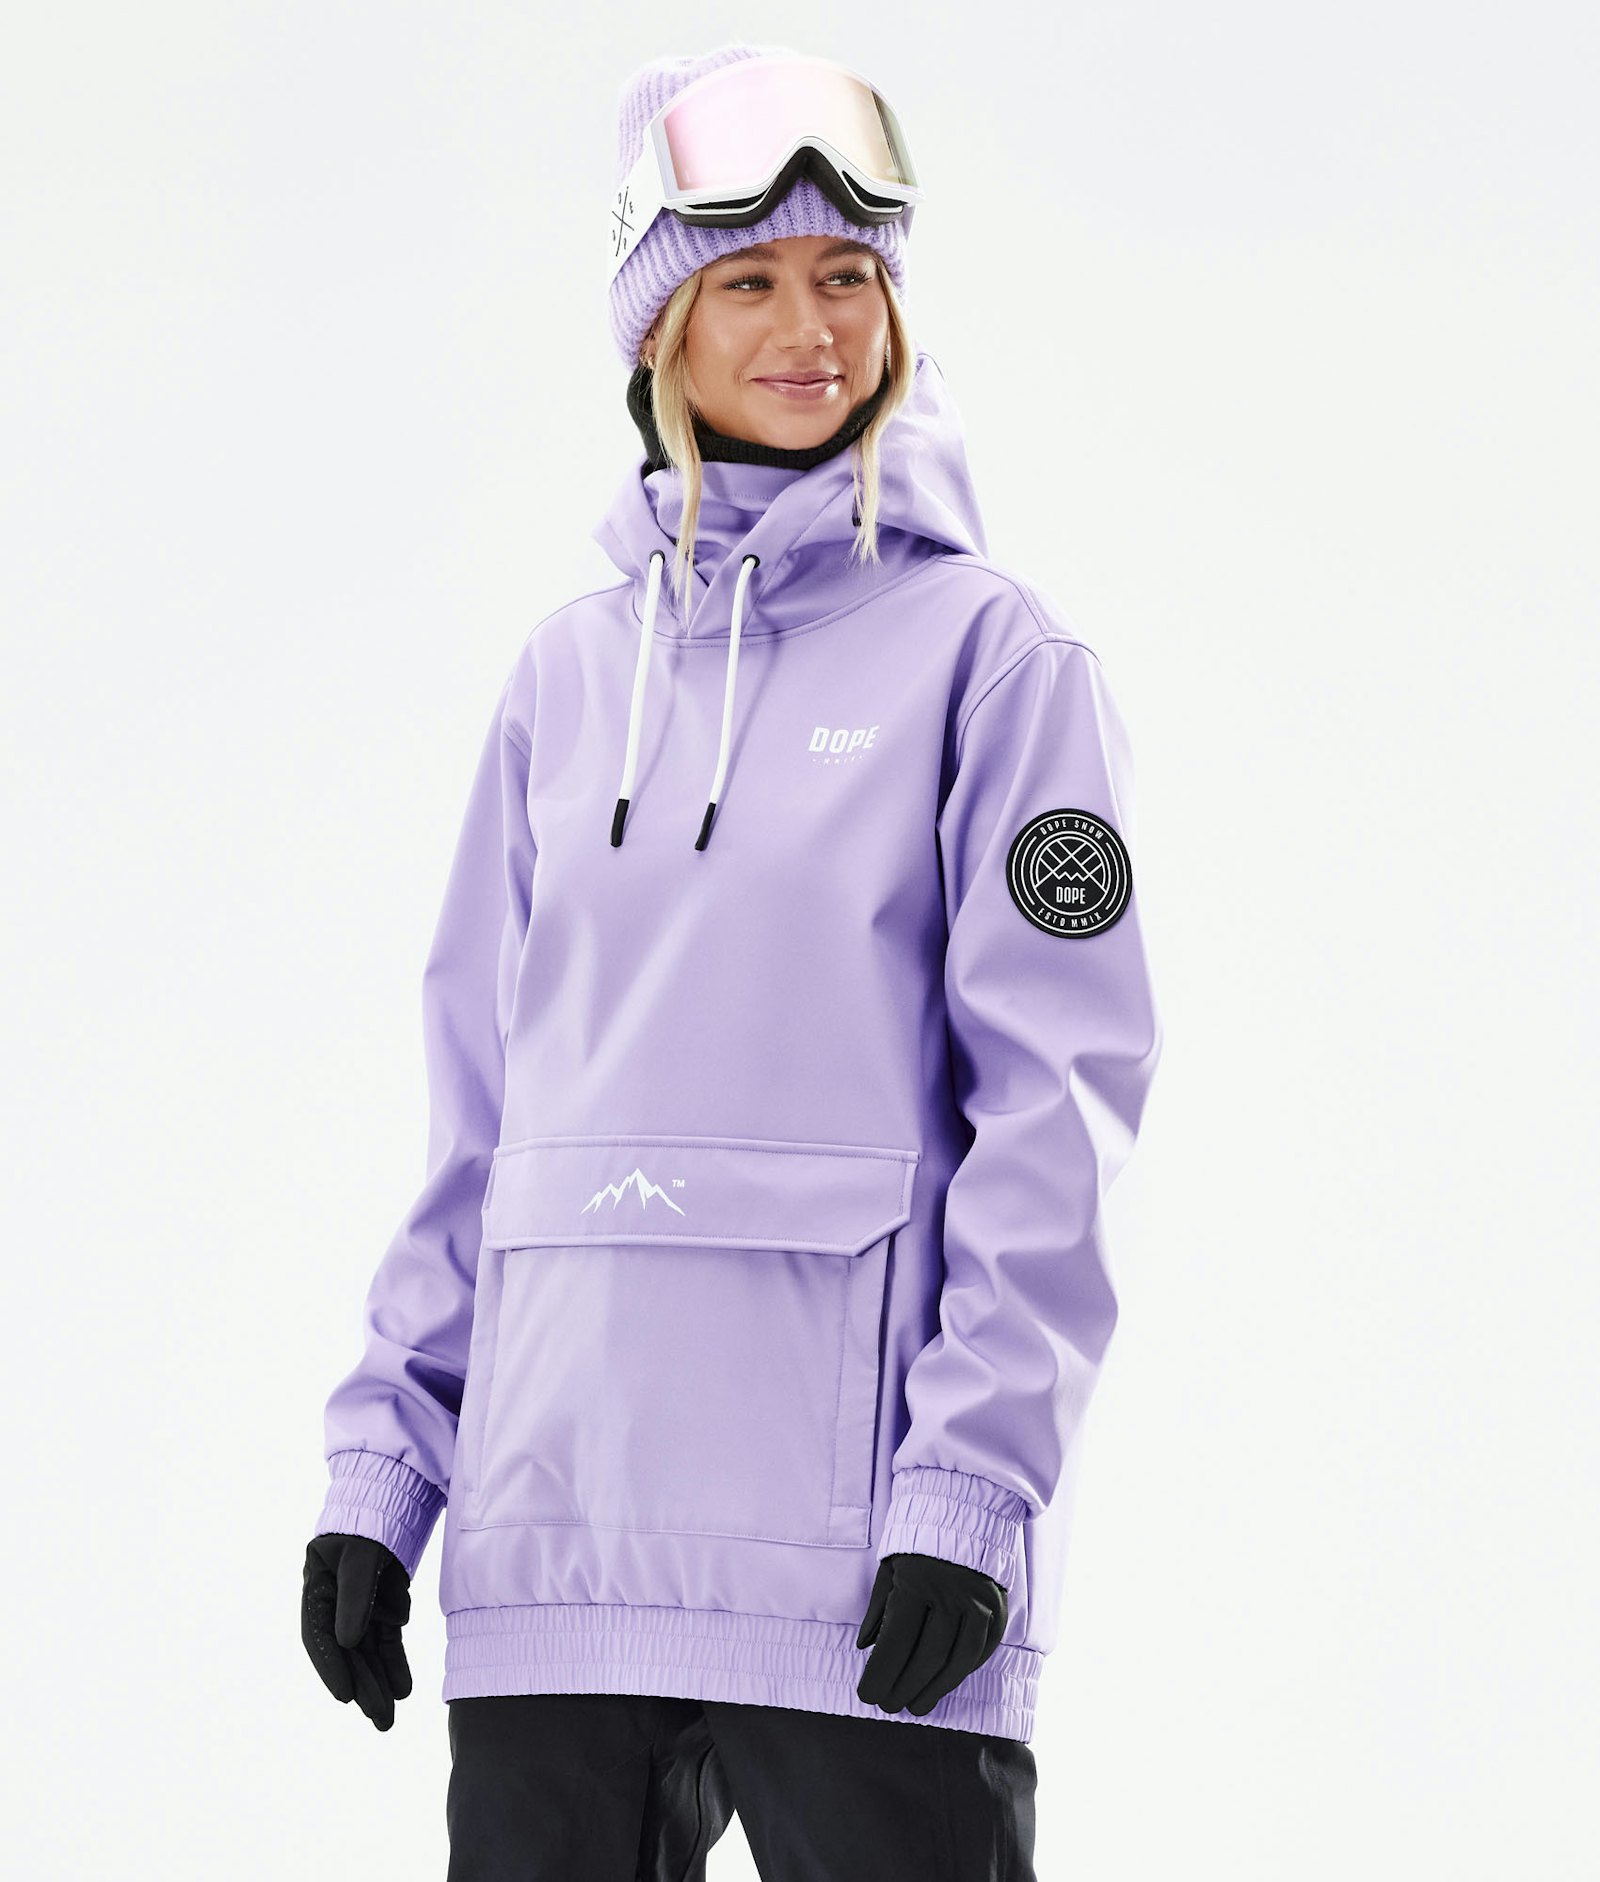 Wylie W Snowboard Jacket Women Capital Faded Violet Renewed